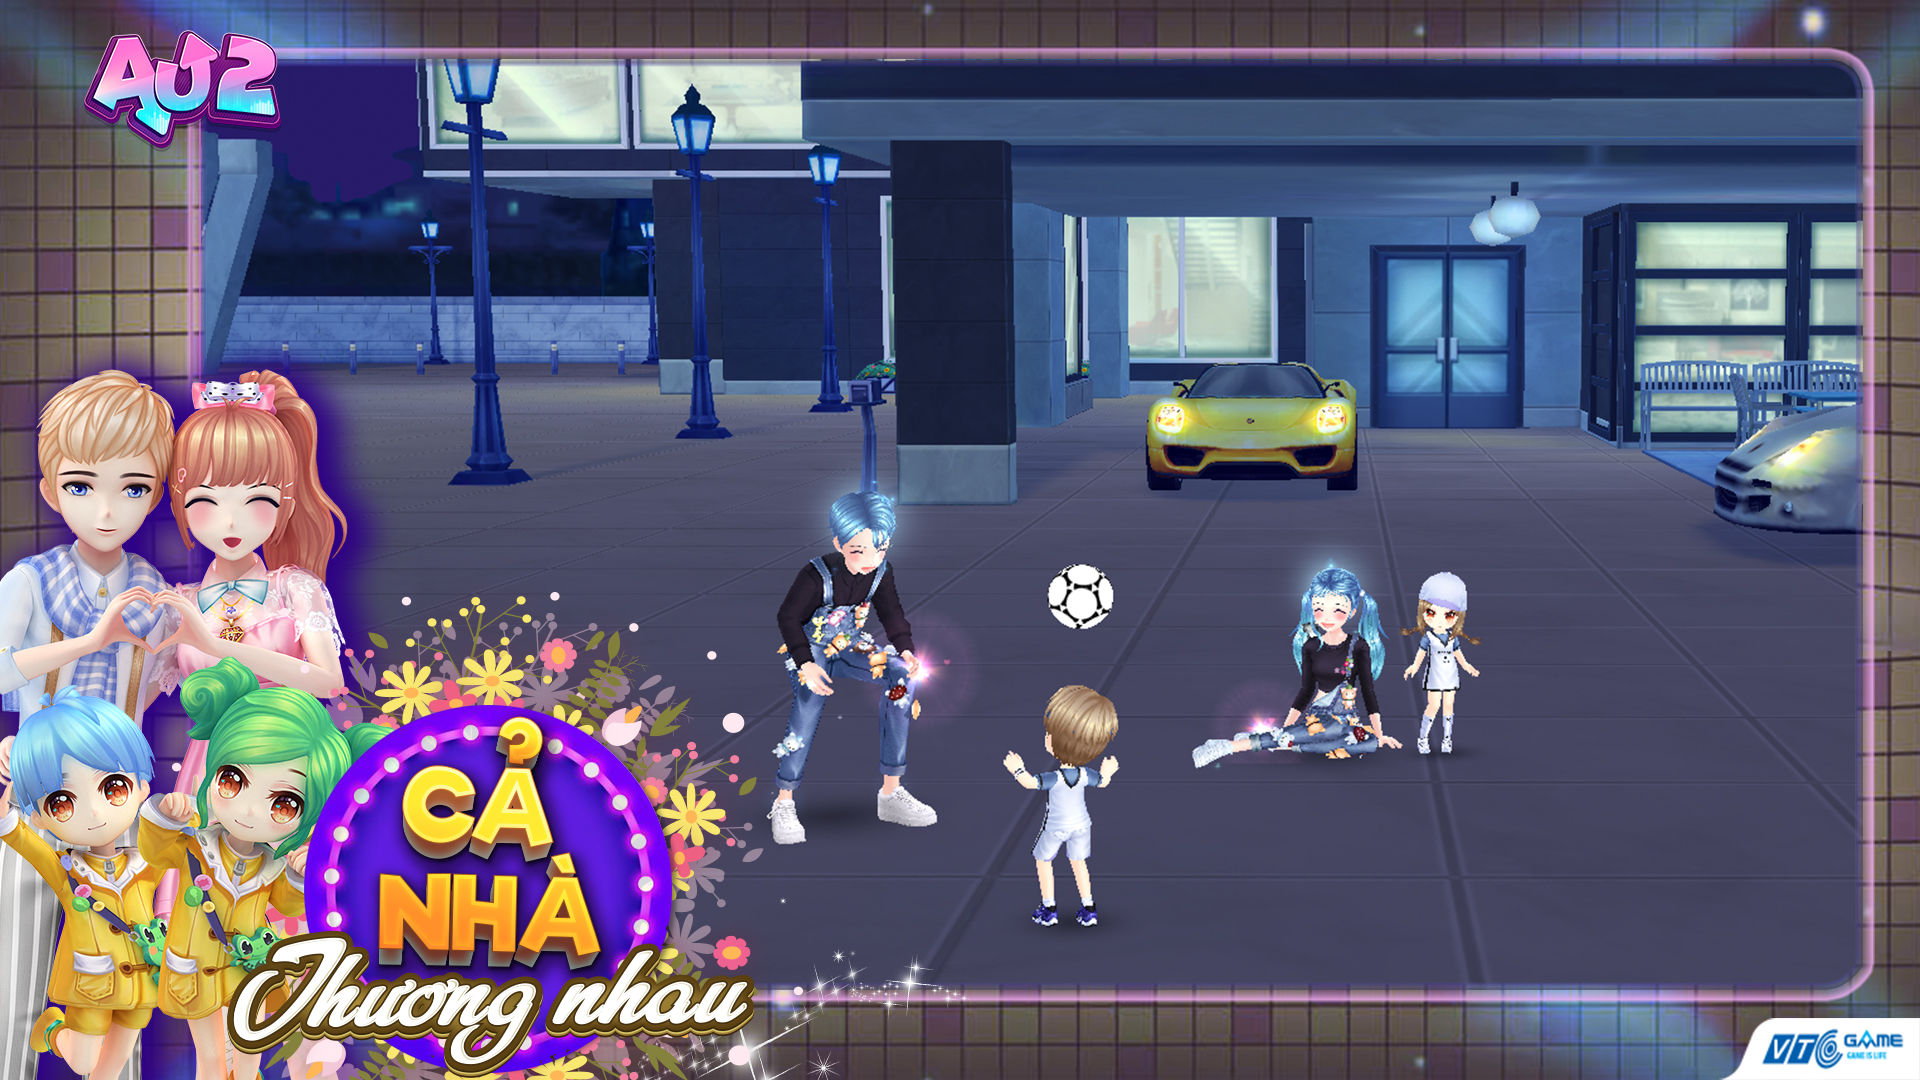 Screenshot of Au 2 - Chuẩn Style Audition - VTC Game